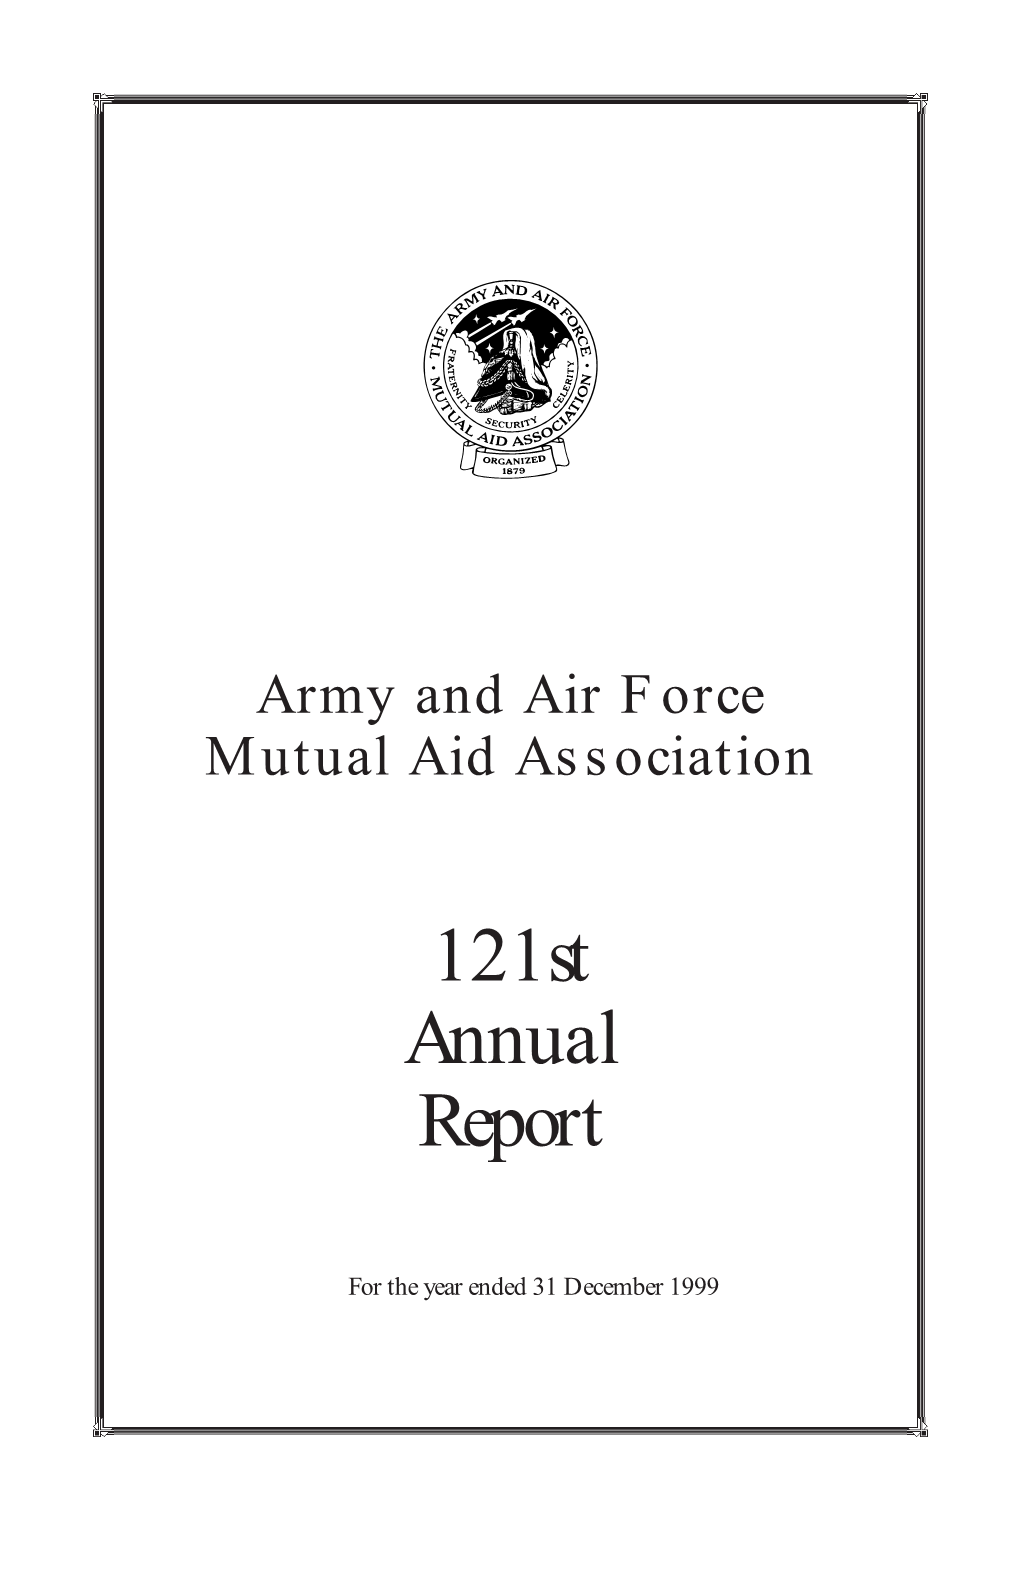 1999 Annual Report